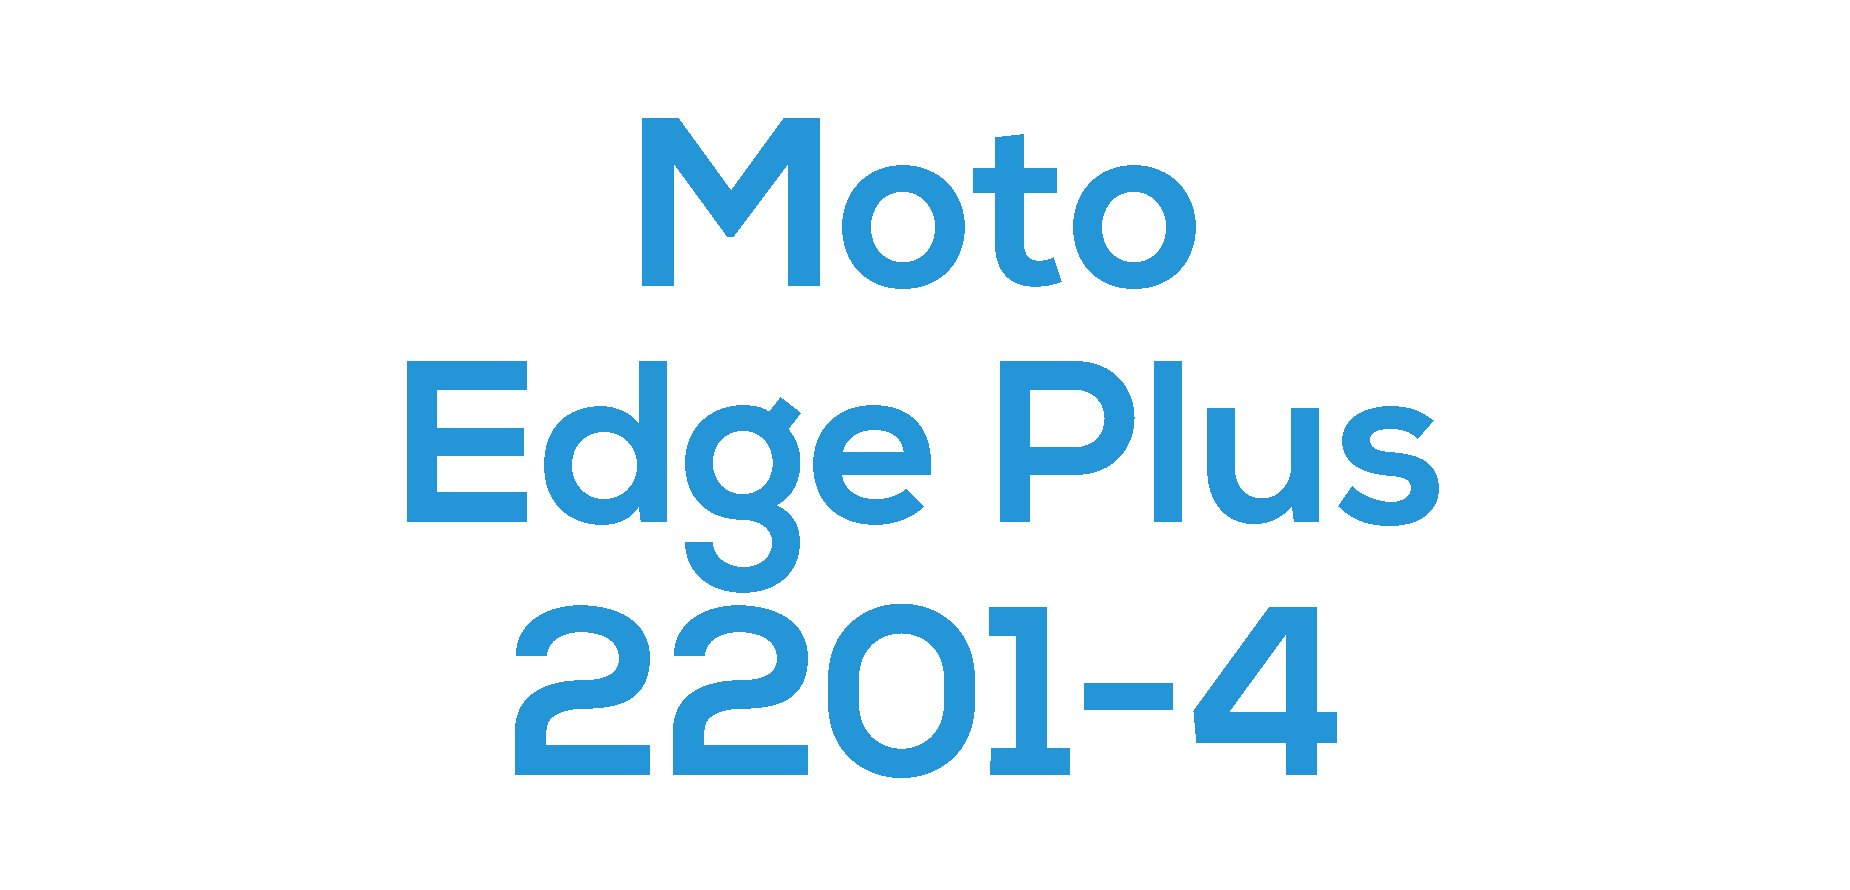 Edge Plus (XT2201-4)